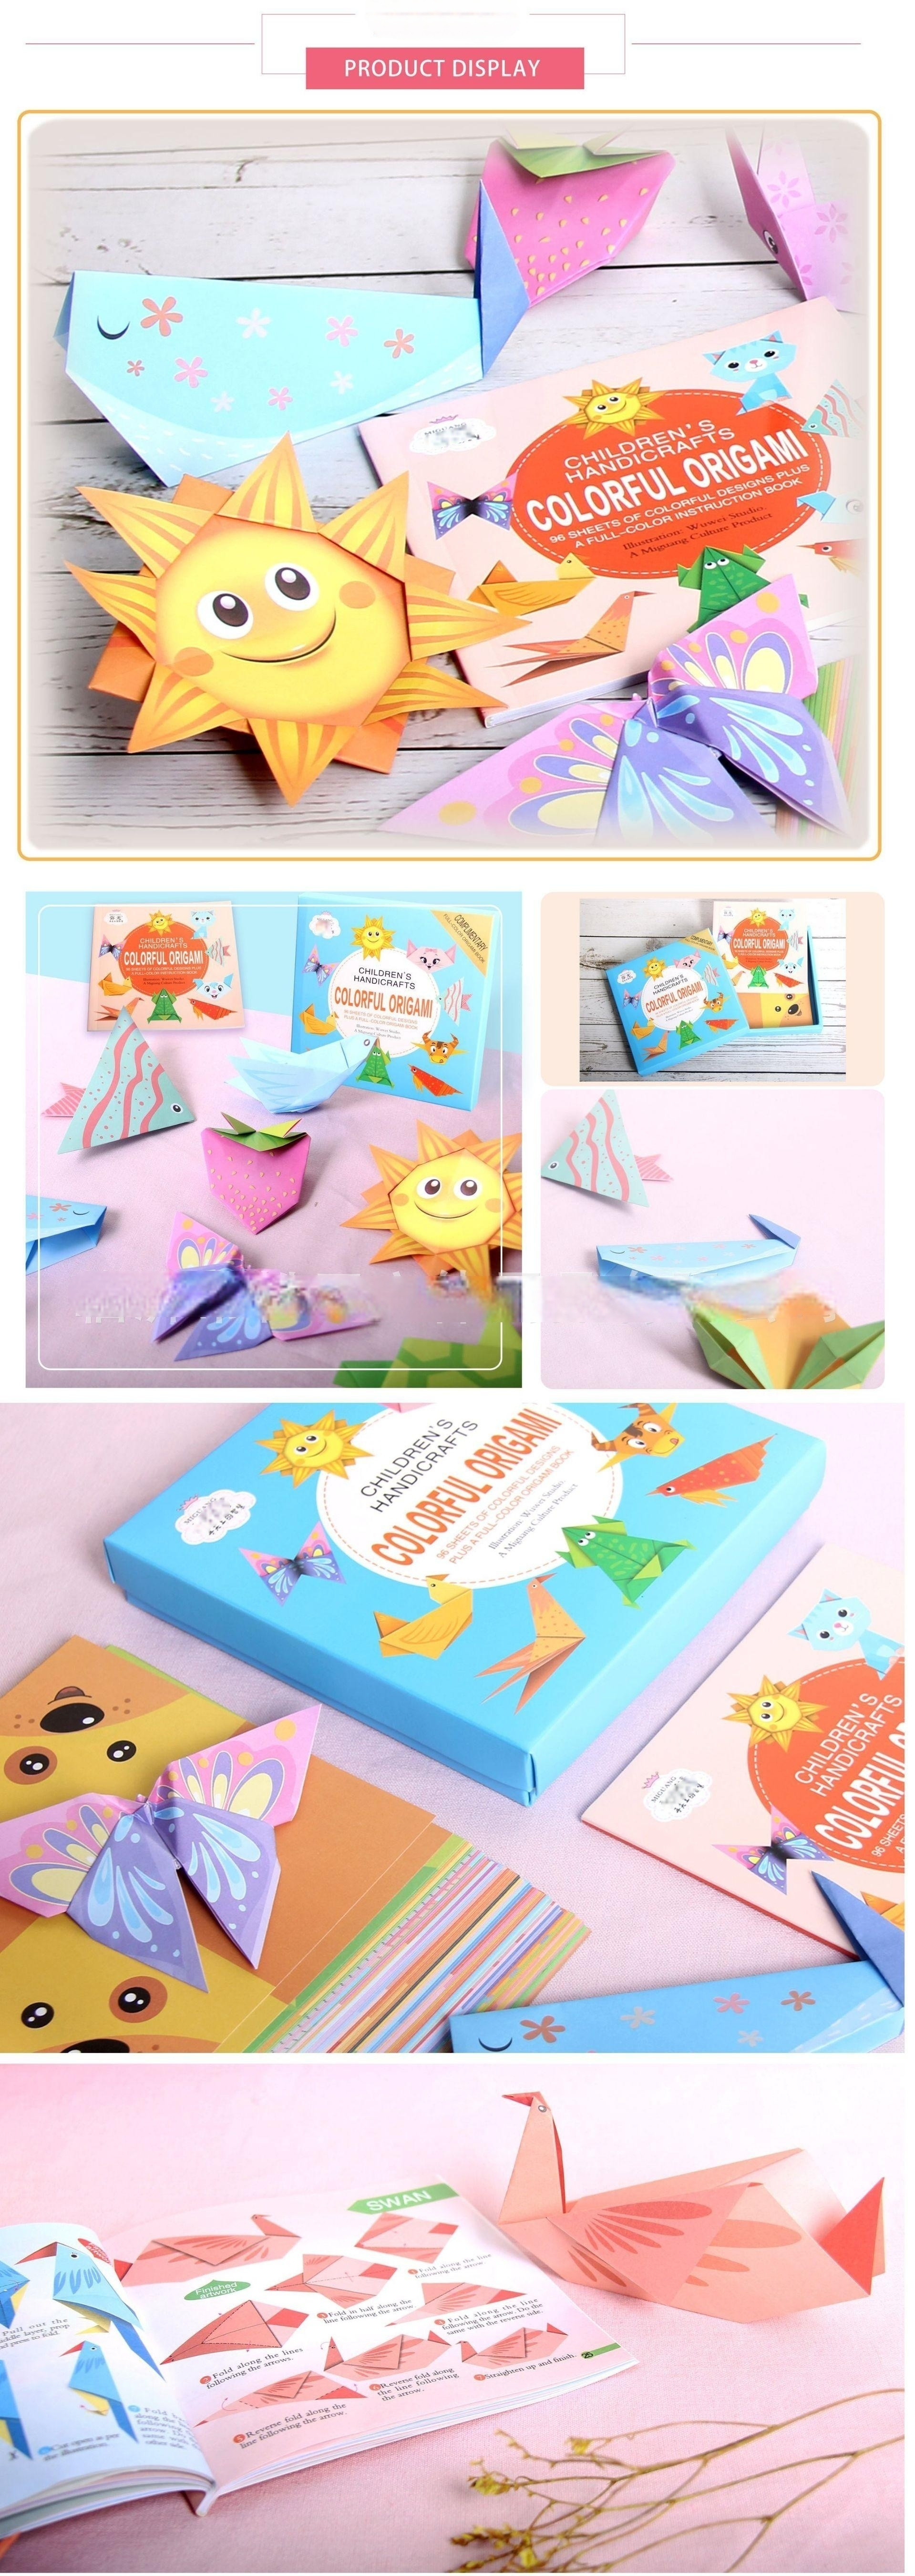 Children's Handmade Origami Set Puzzle Diy Color Origami Complete Book